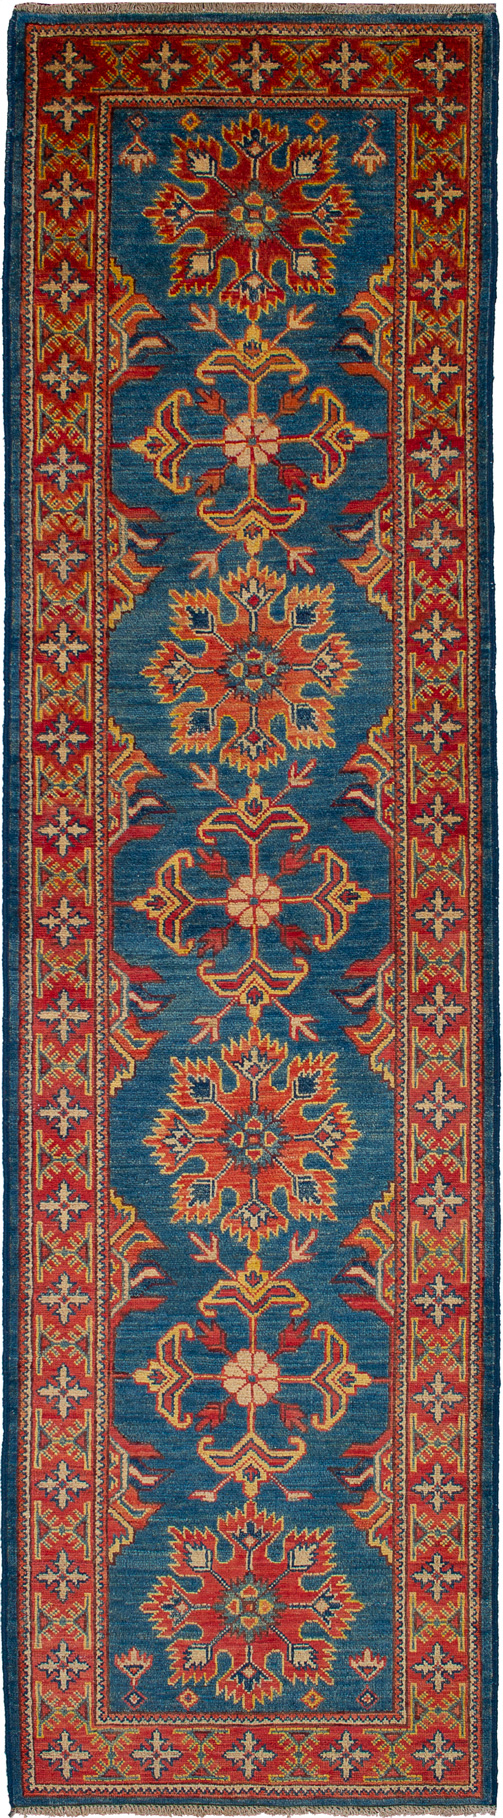 Hand-knotted Finest Gazni Dark Copper Wool Rug 2'8" x 10'0"  Size: 2'8" x 10'0"  